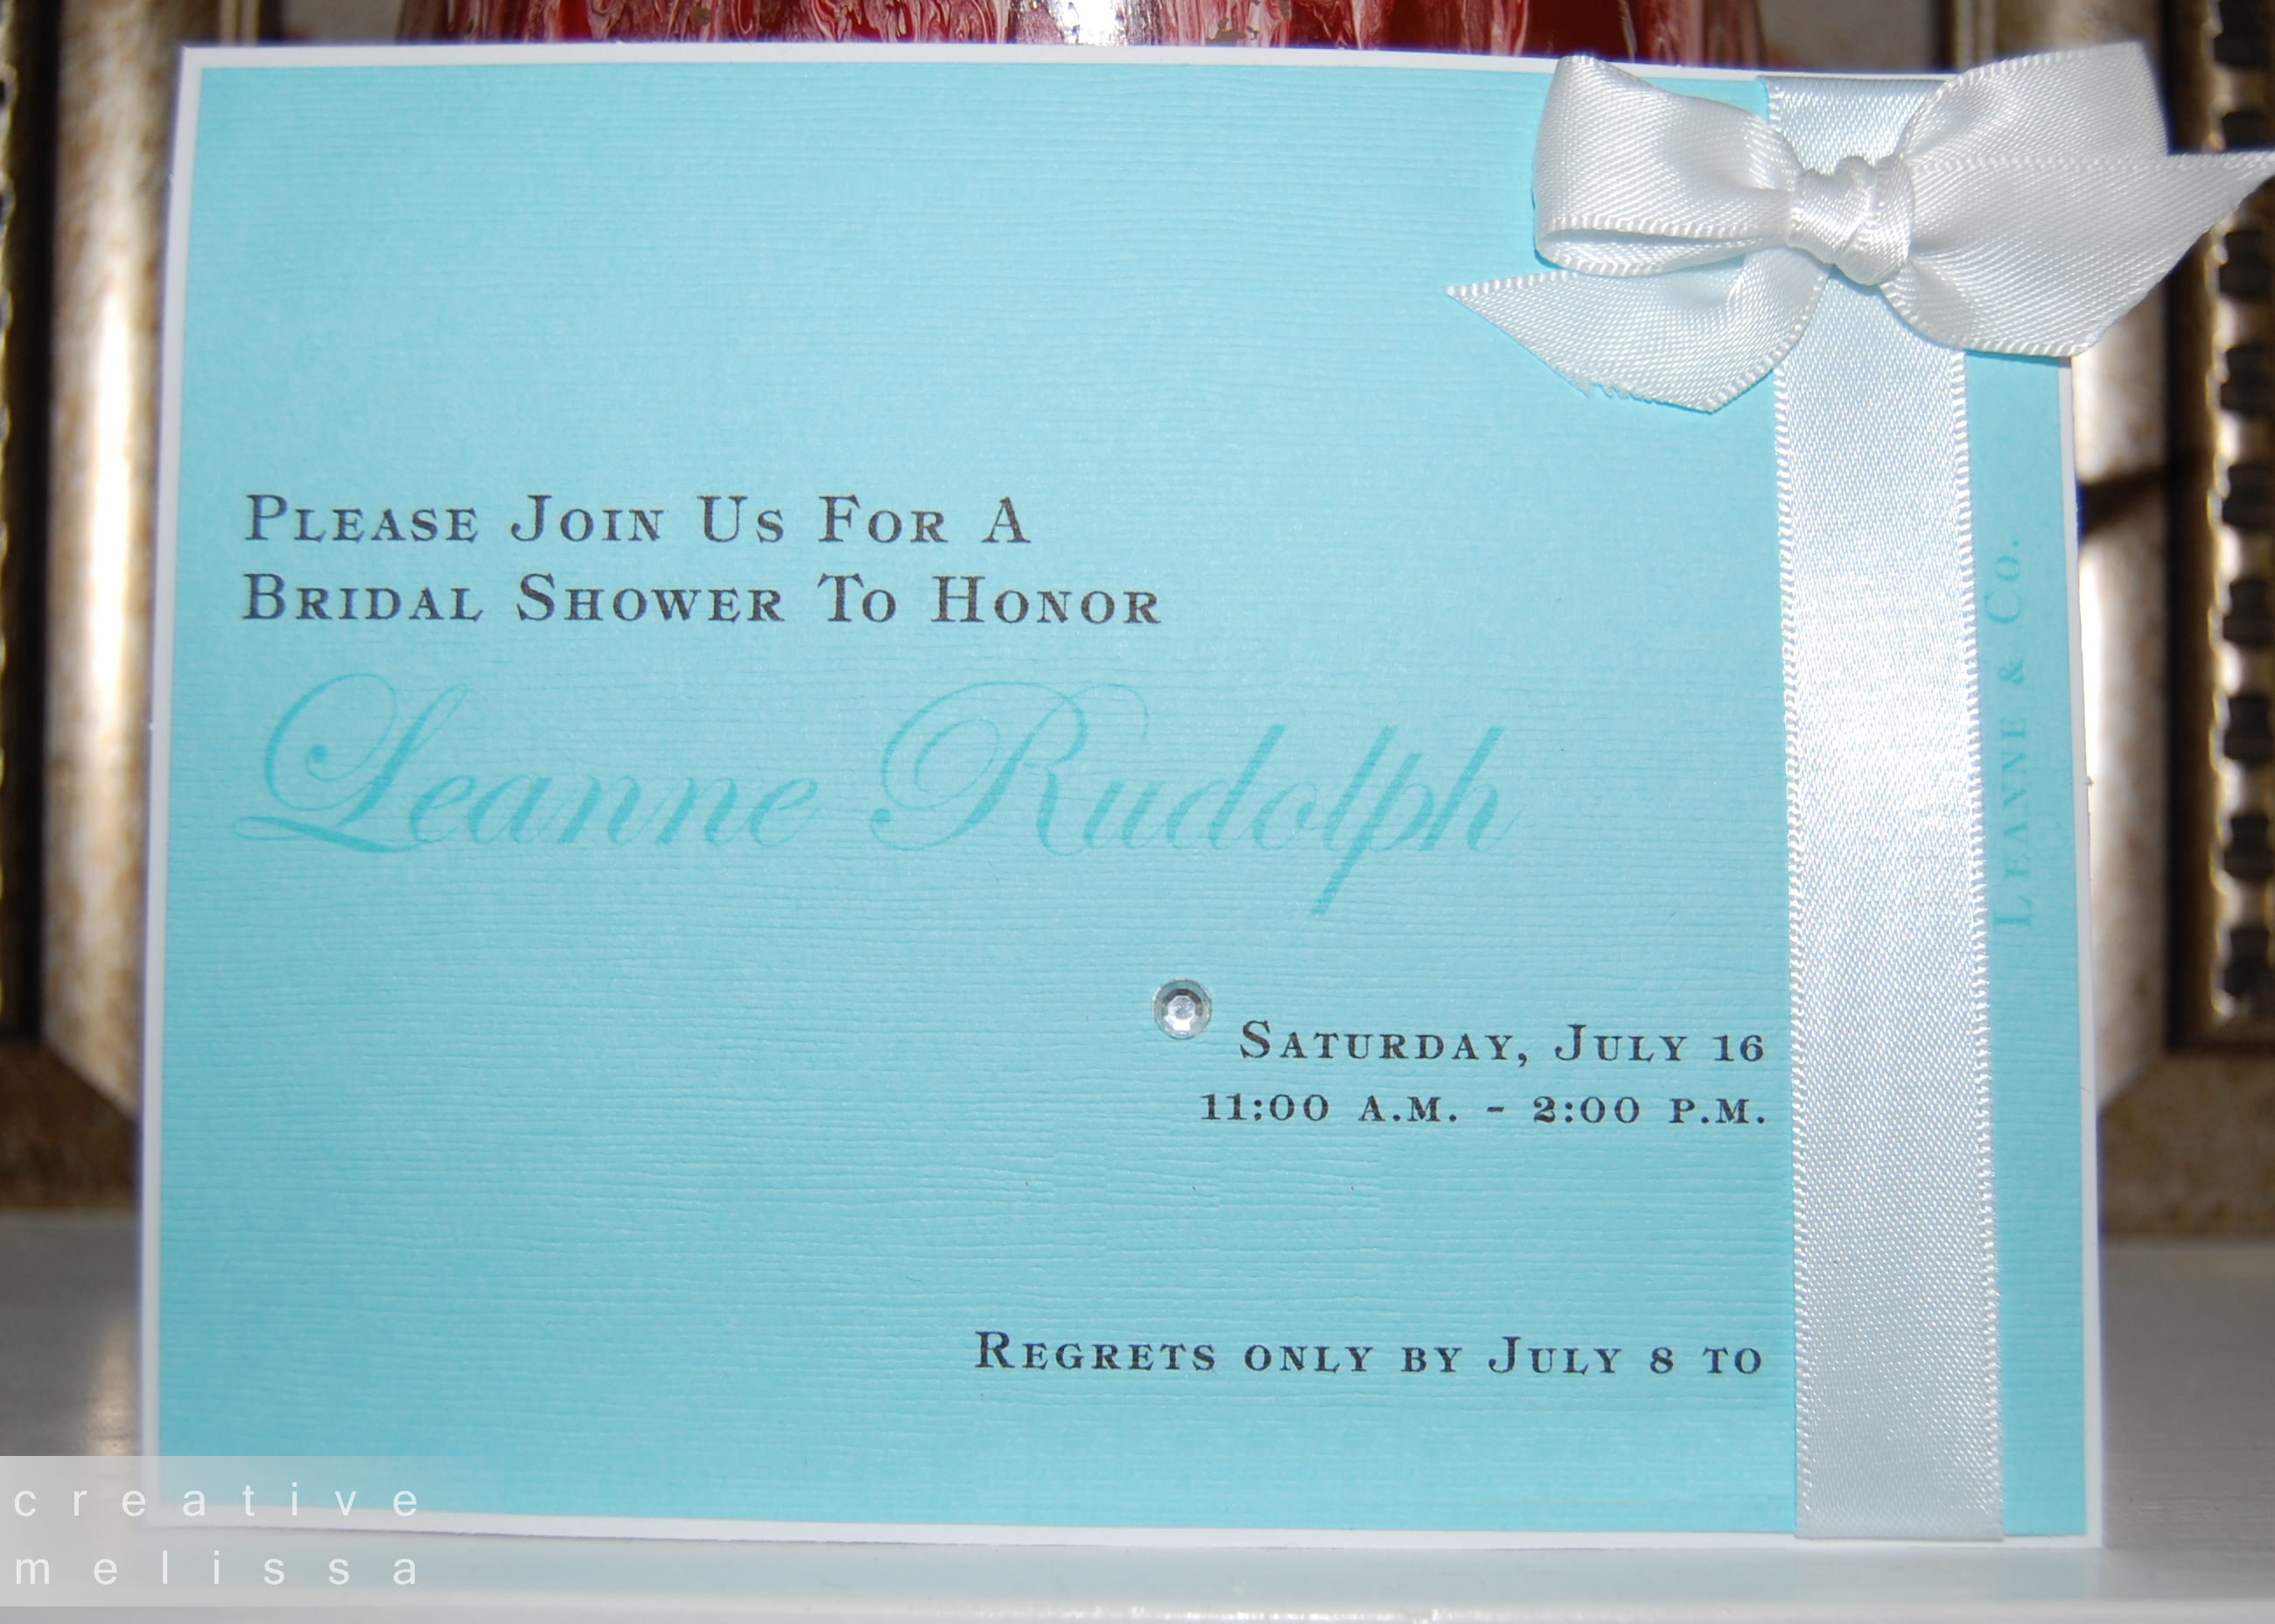 Tiffany bridal shower invitations - Creative Melissa Designs